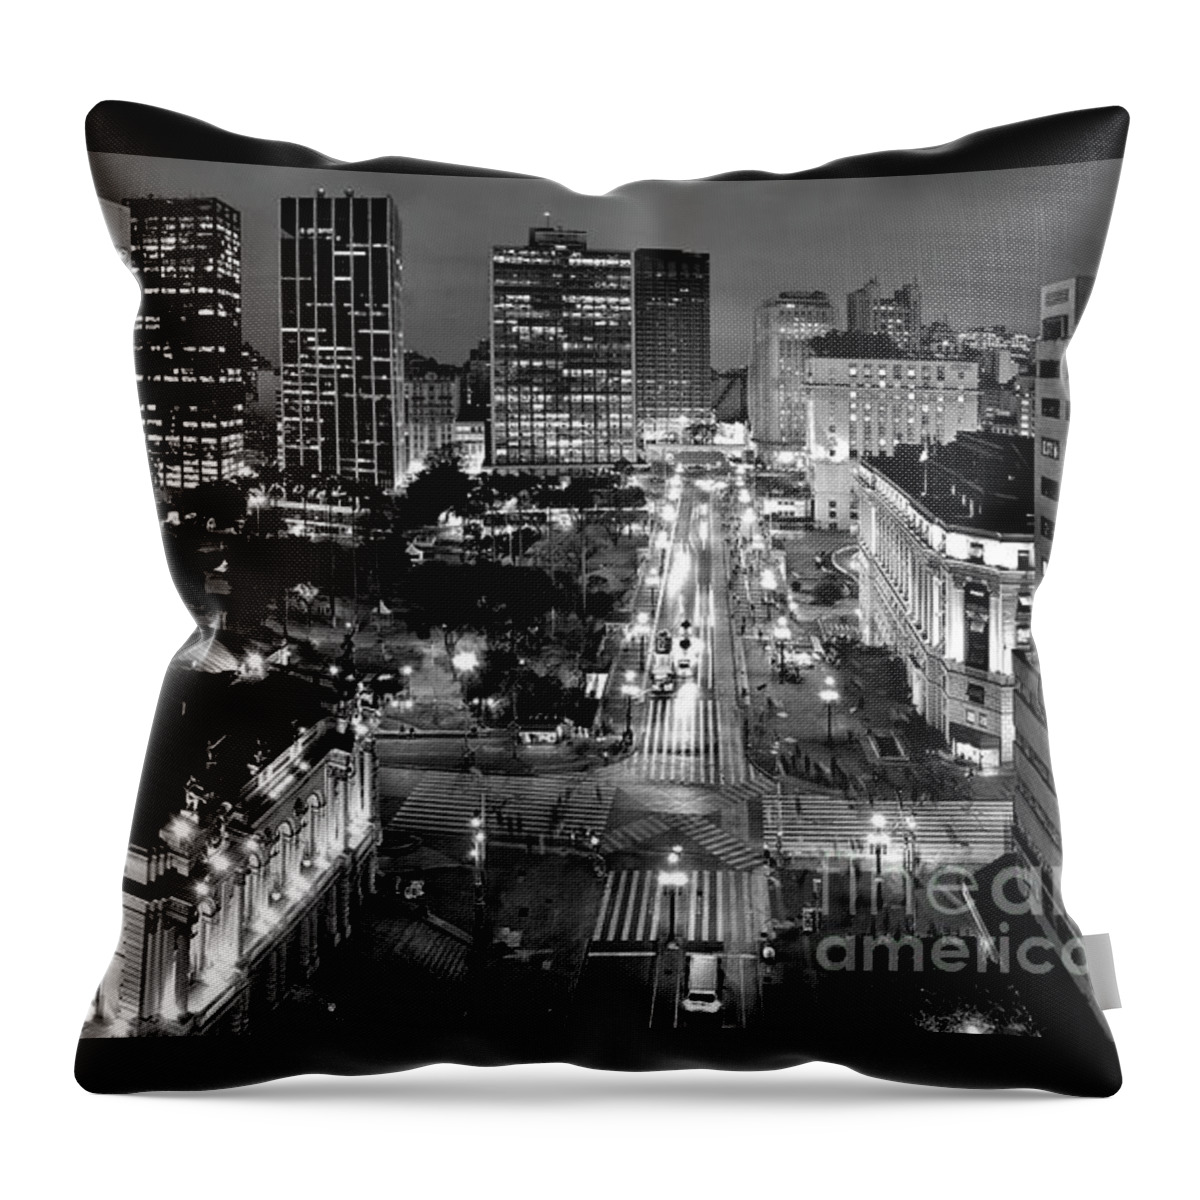 Sao Paulo Throw Pillow featuring the photograph Sao Paulo Downtown - Viaduto do Cha and around by Carlos Alkmin